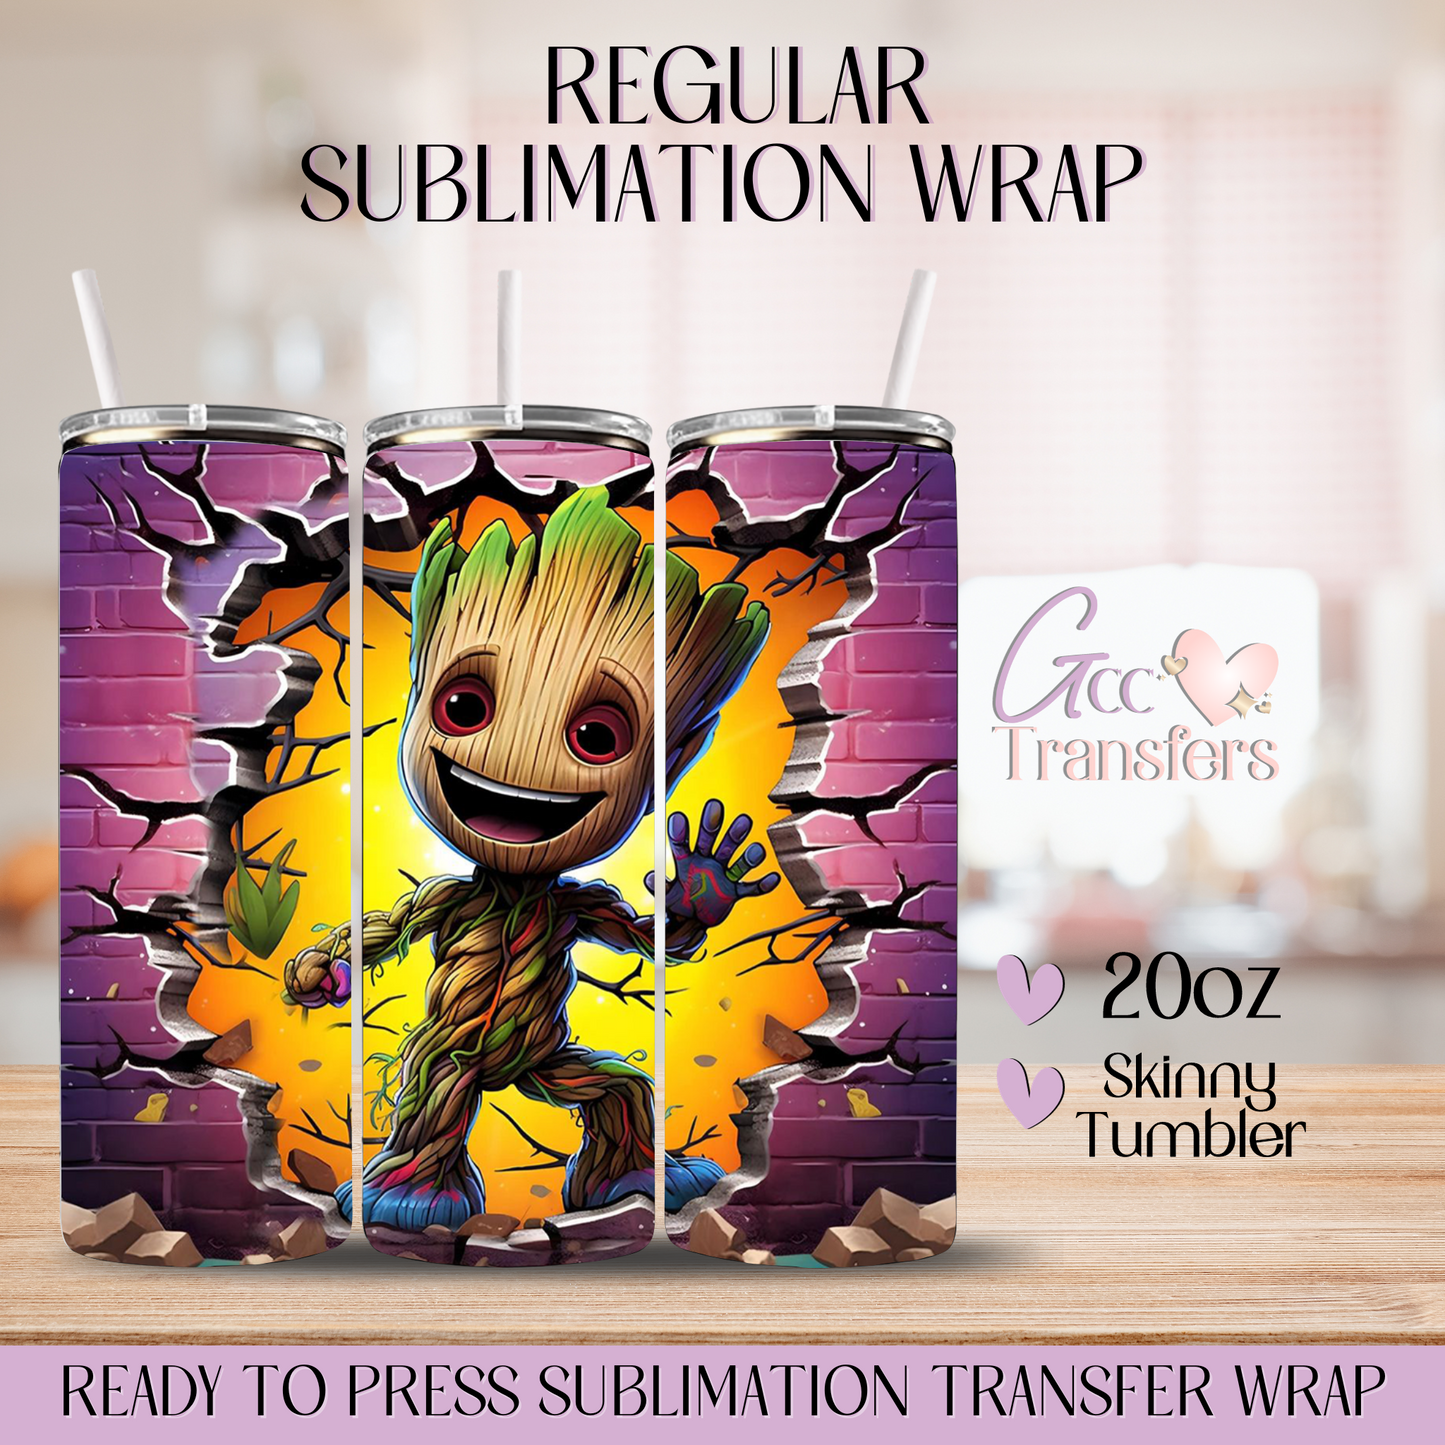 Baby Groot Guardians - 20oz Regular Sublimation Wrap